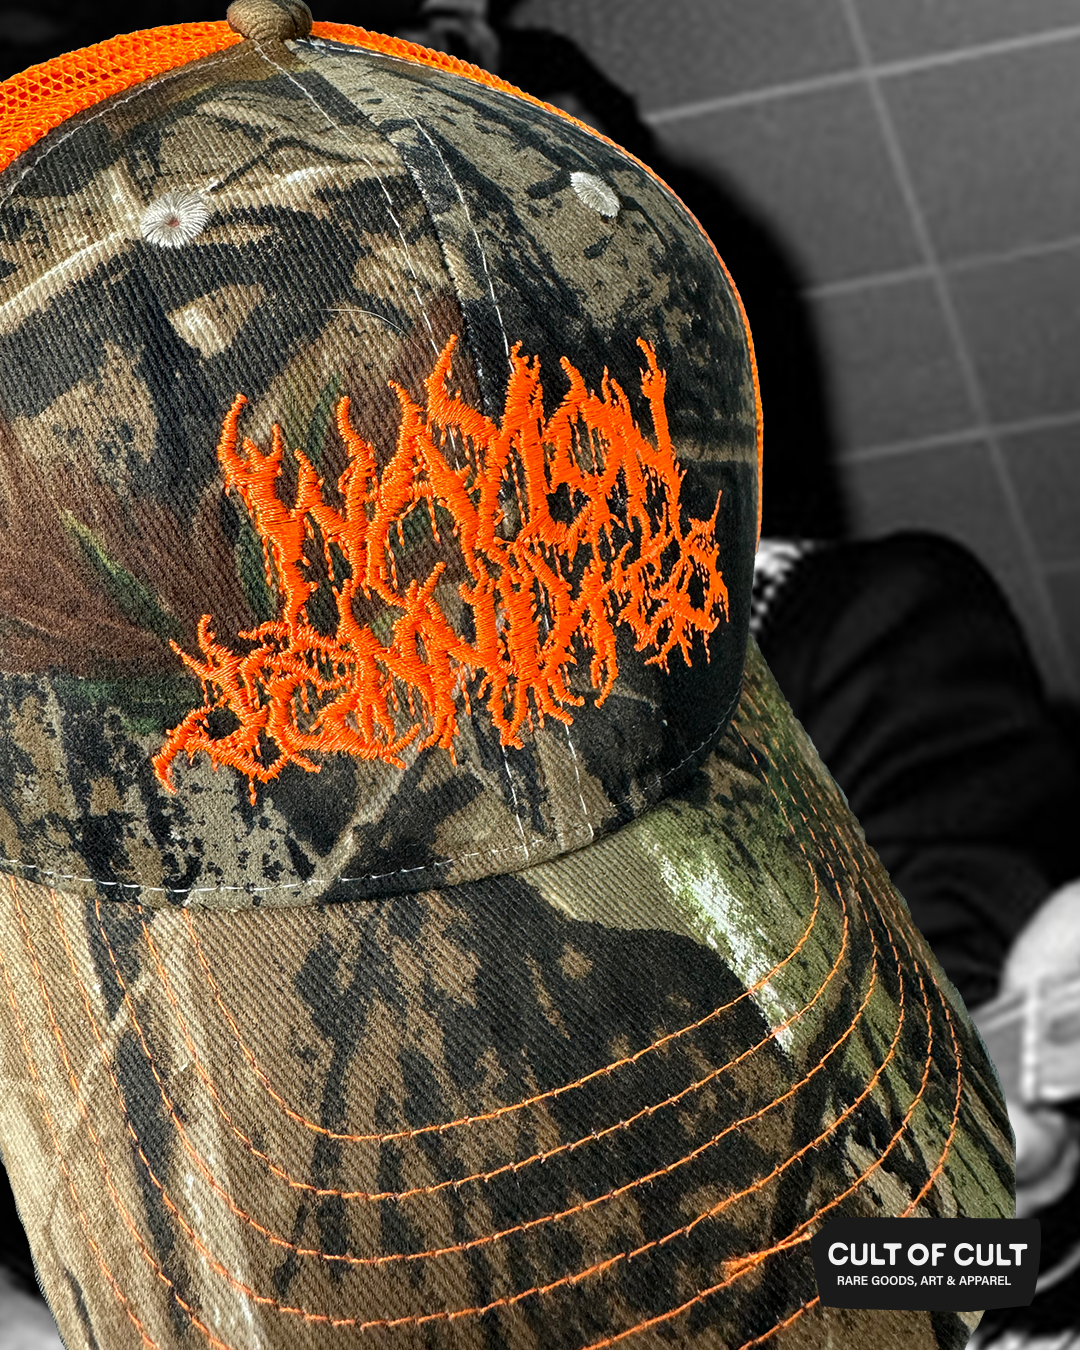 a close up view of the orange and camo Waylon Jennings trucker hat